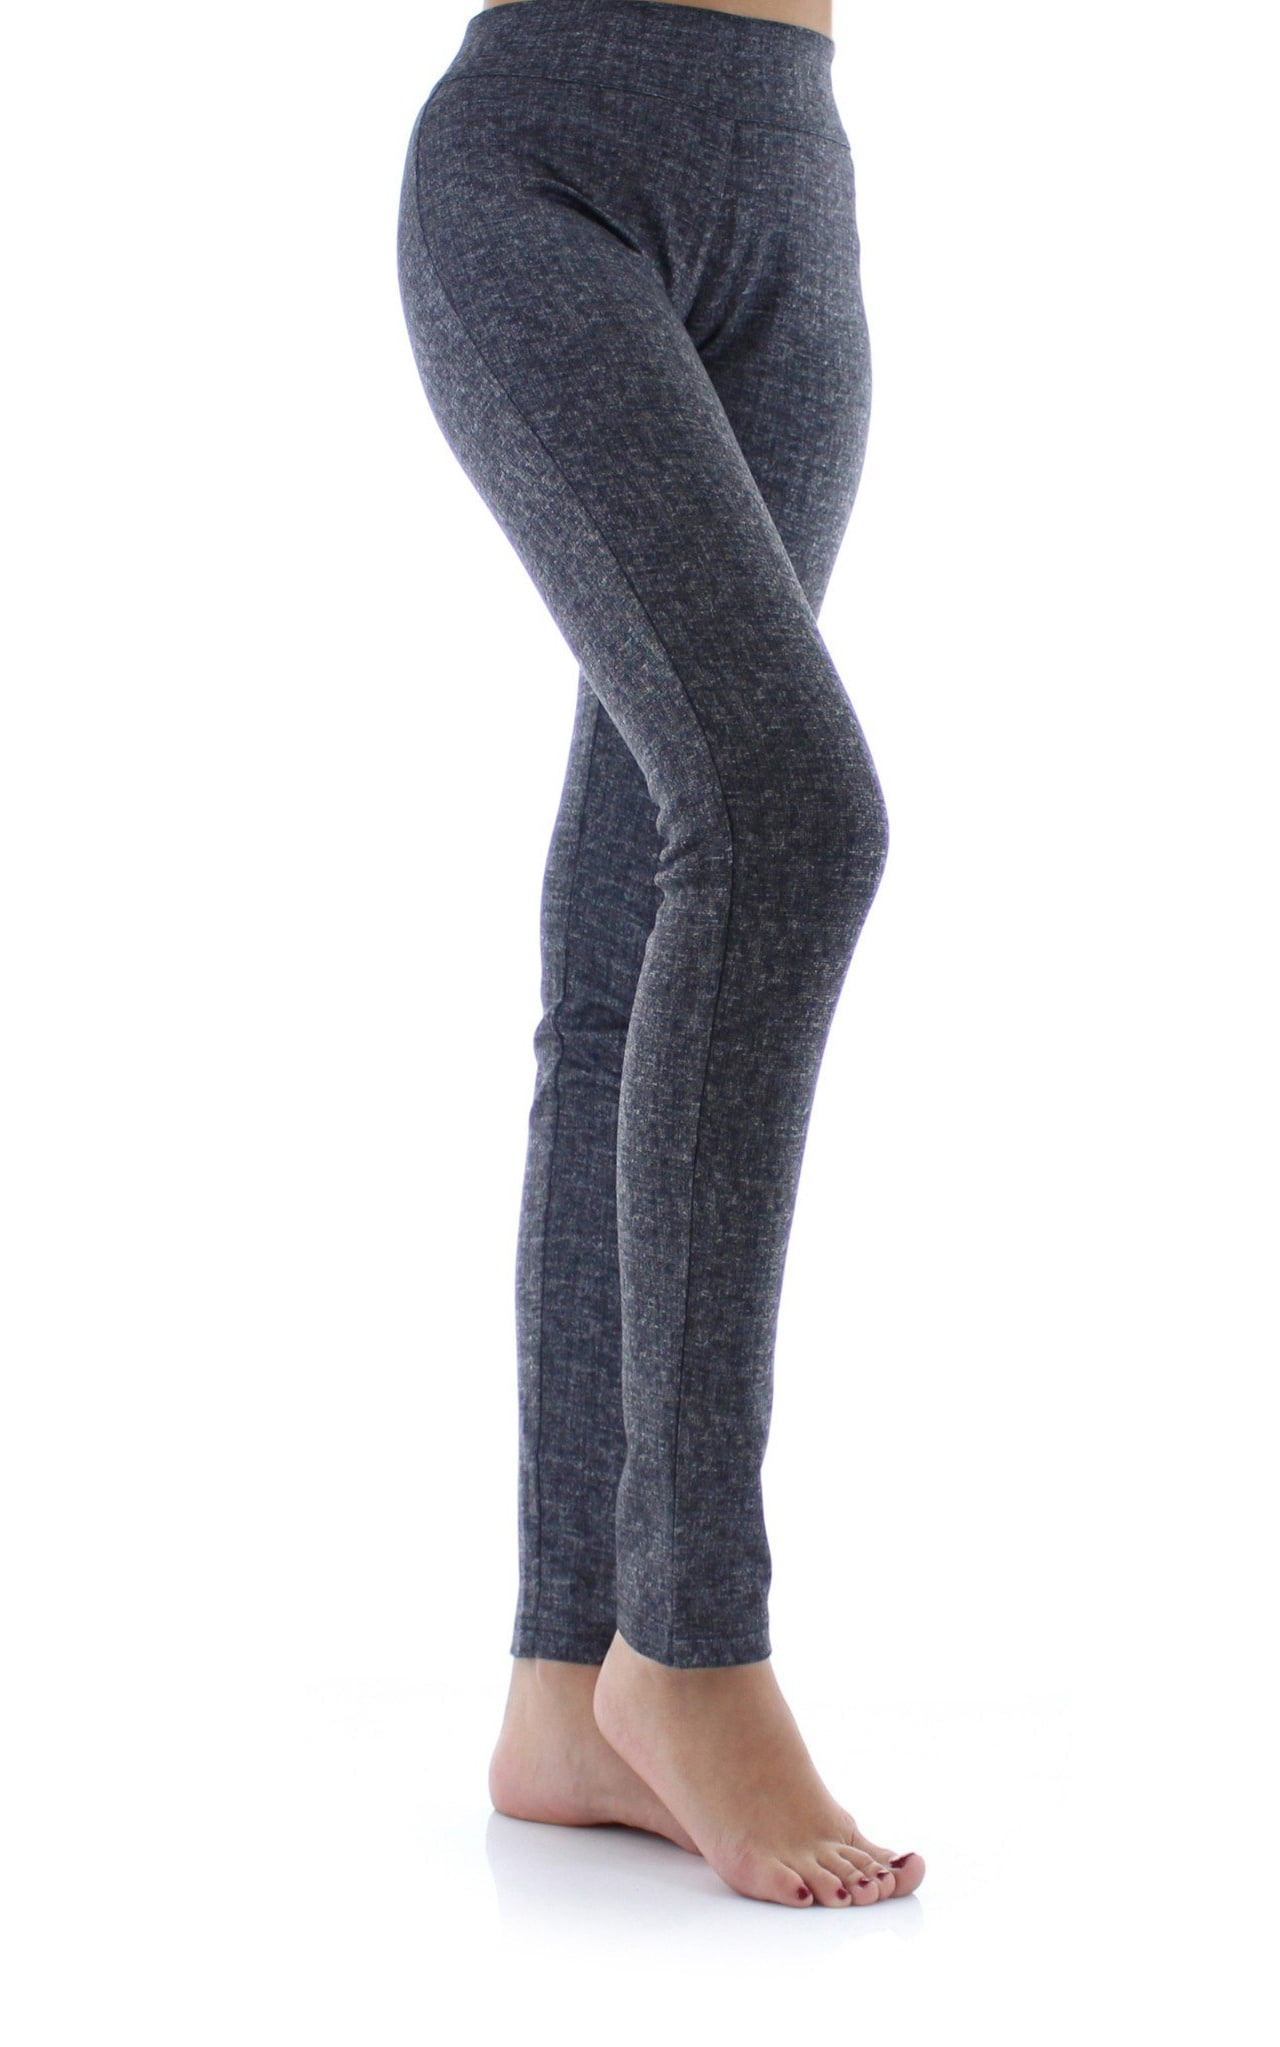 Maruna Waist-Slimming Legging - Office Wear Fashion Leggings by  Medium/Large / Black MF5 062 